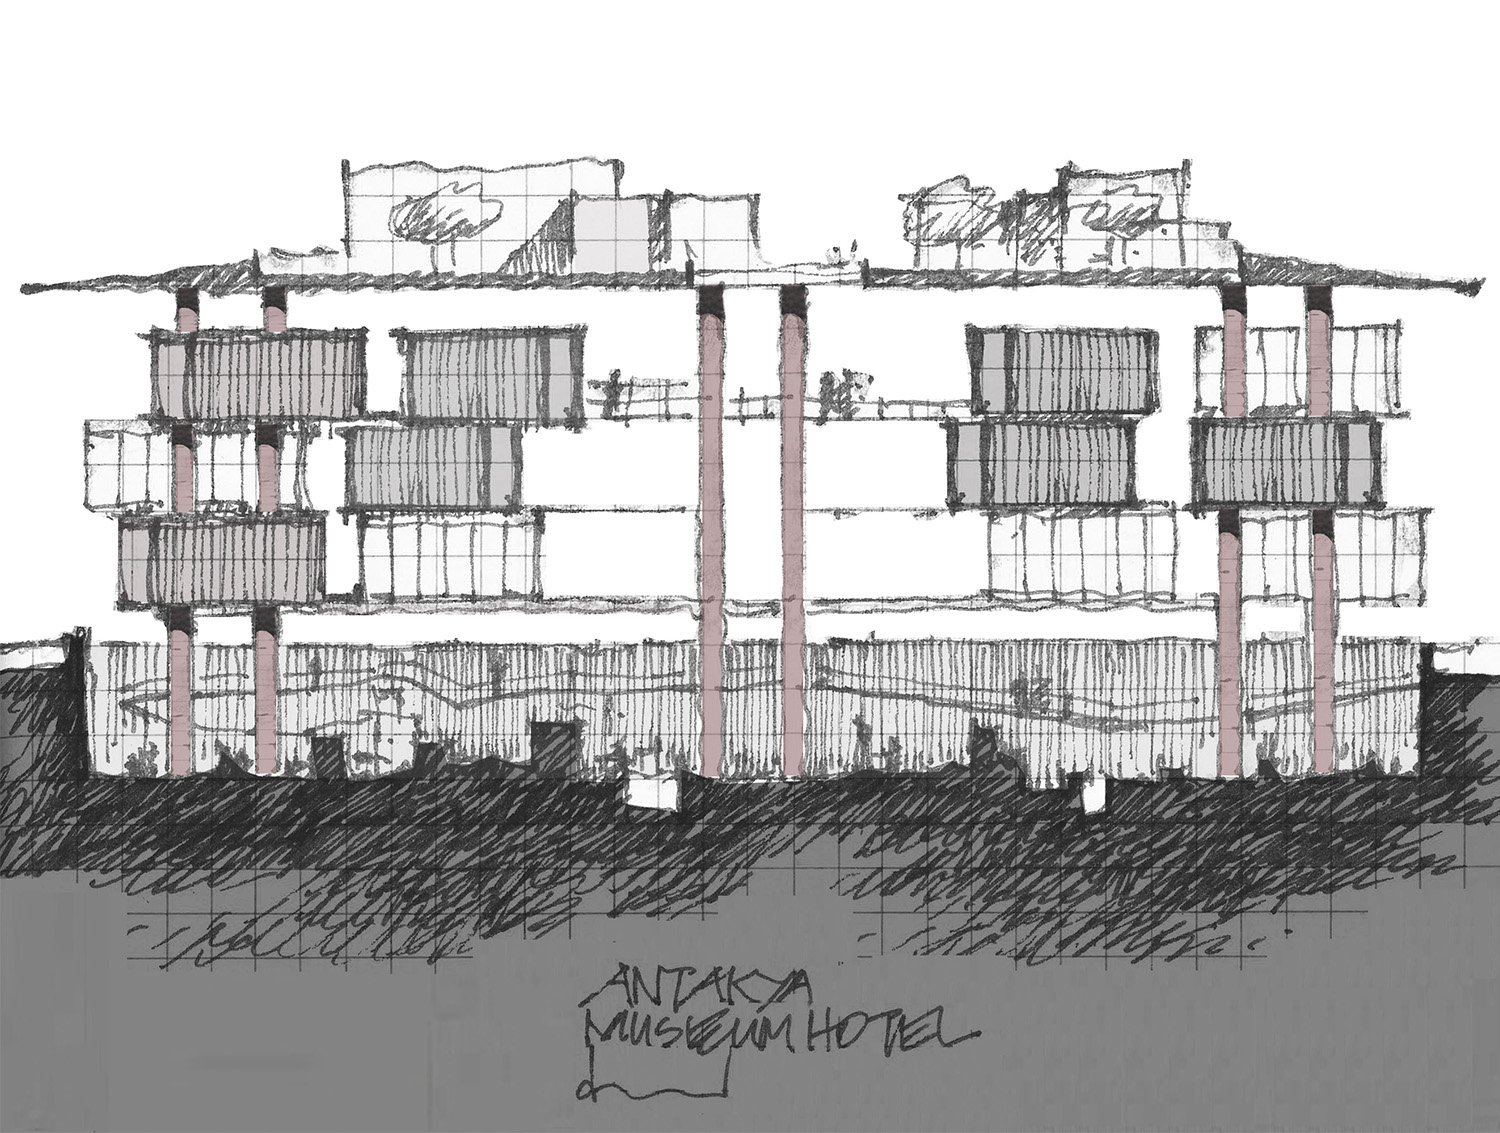 The Museum Hotel Antakya Sketch | Emre Arolat